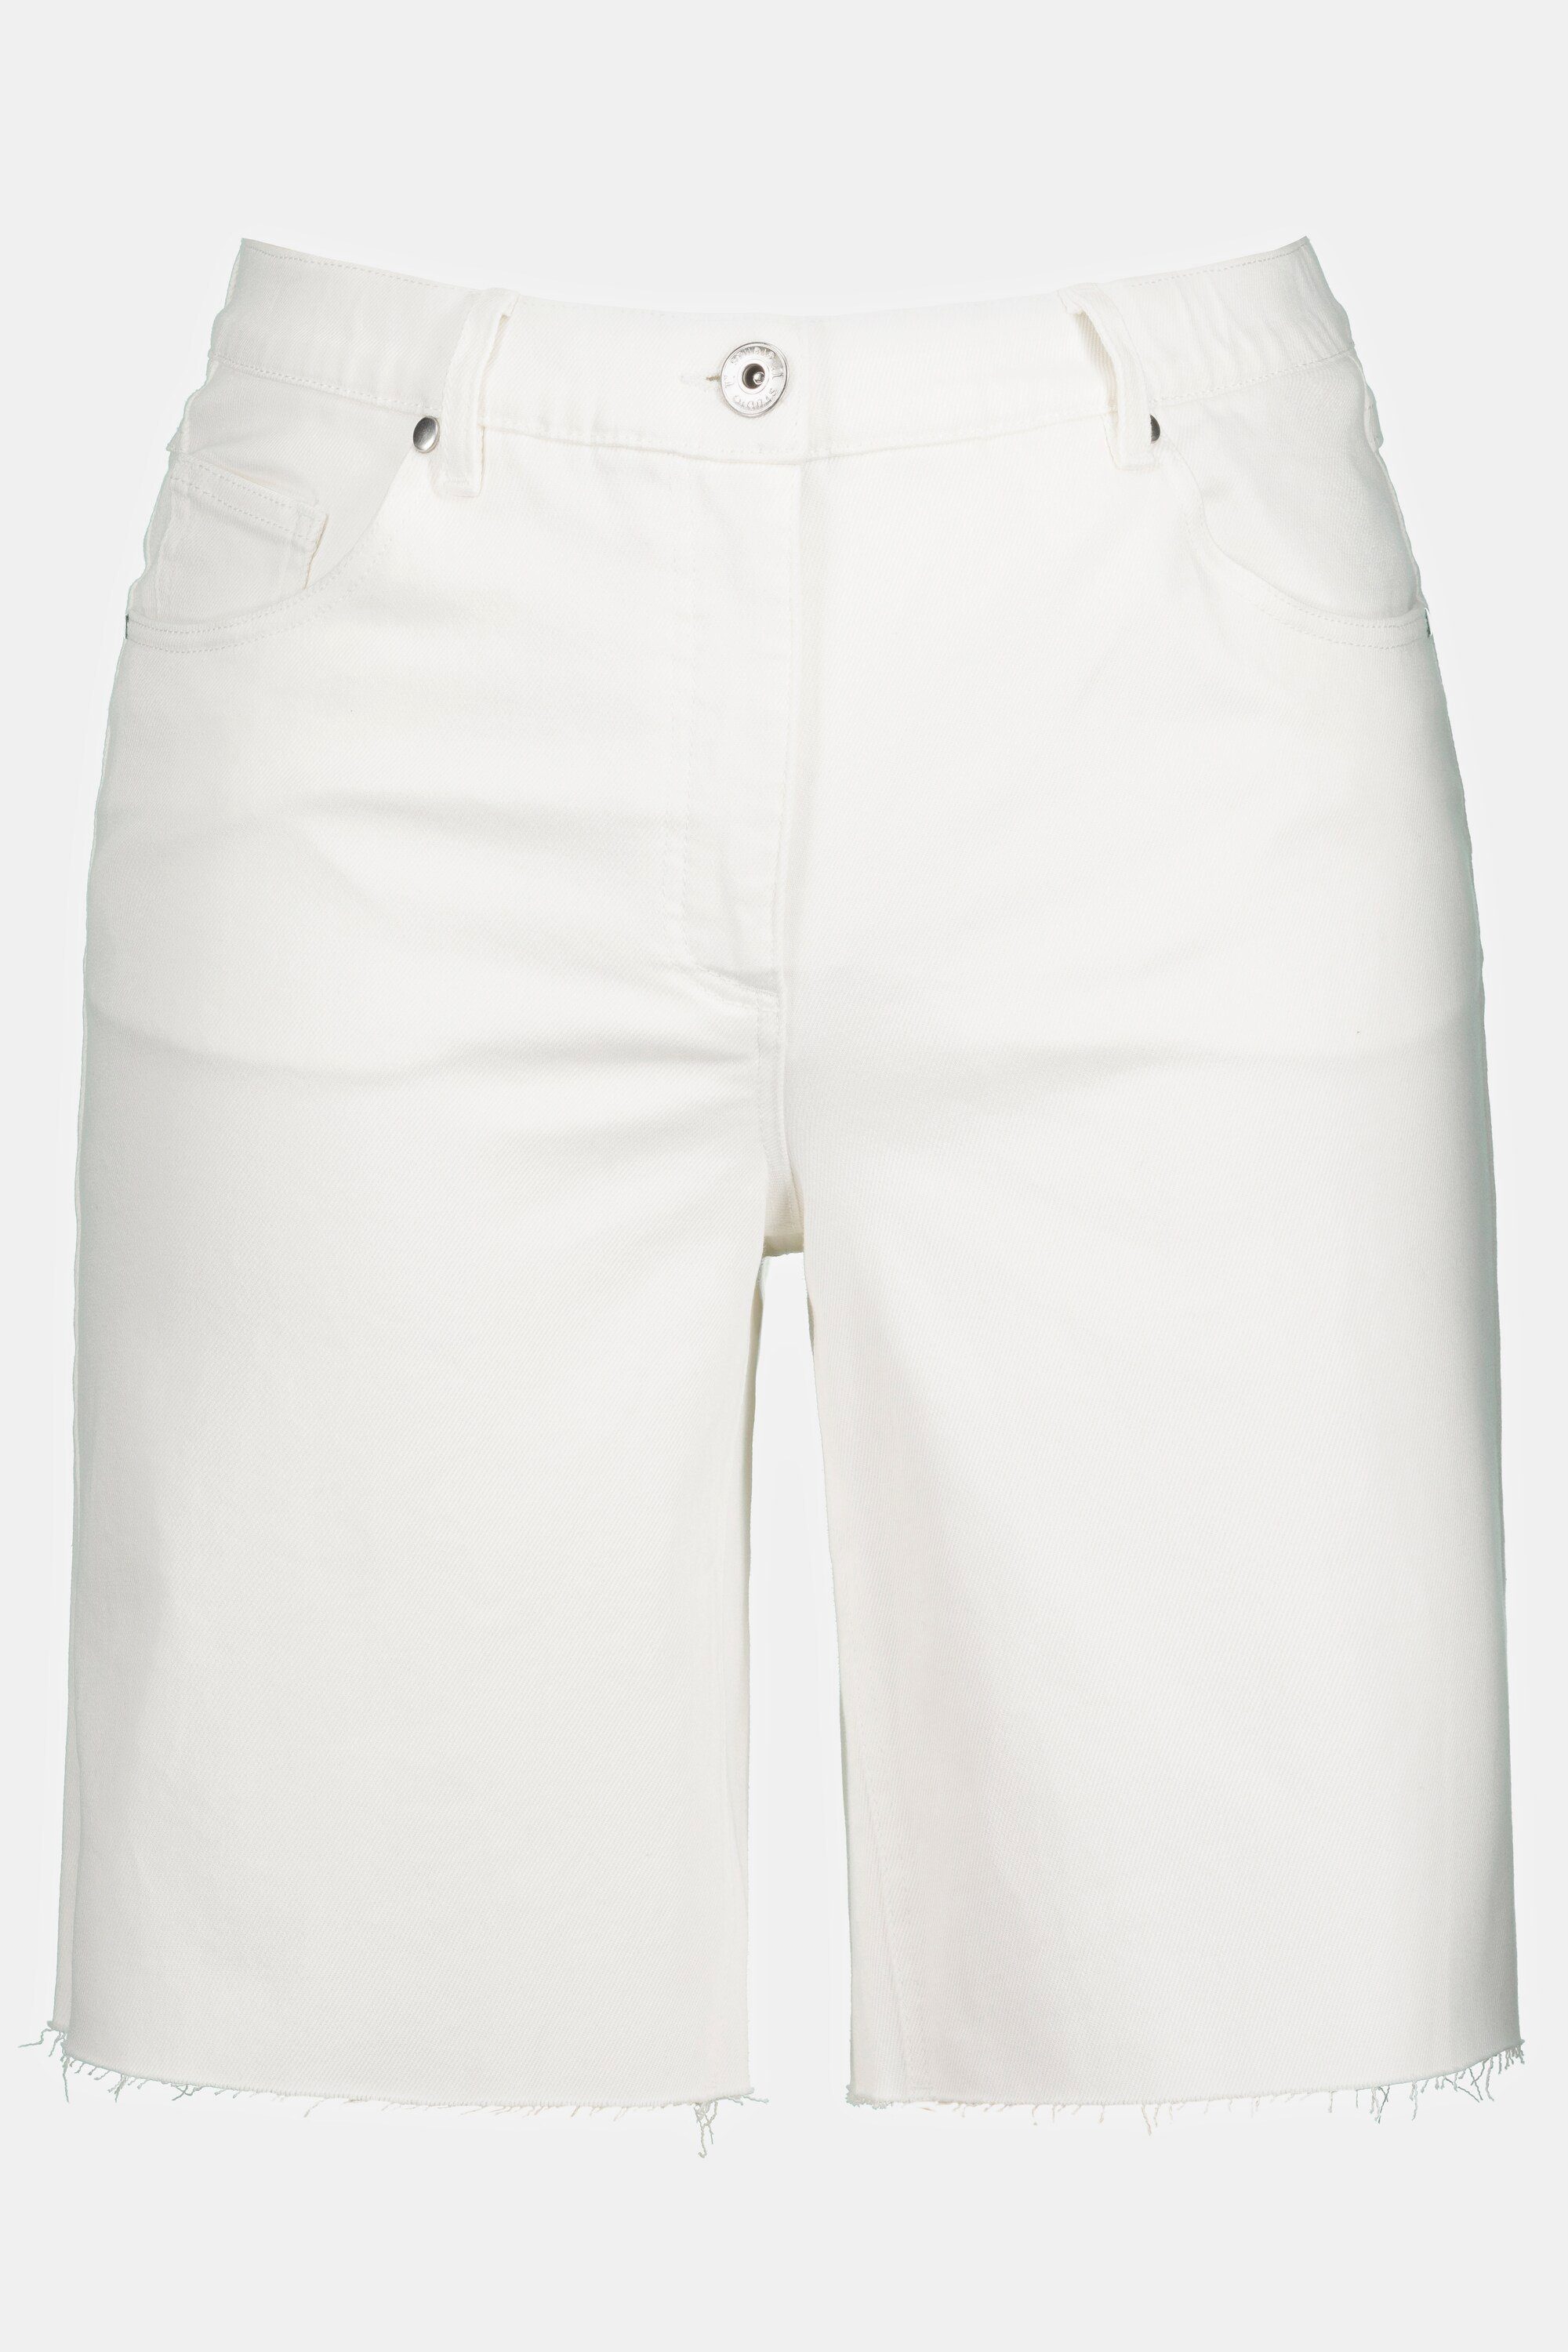 Studio Untold Jeansshorts Jeans-Shorts High 5-Pocket offwhite Waist